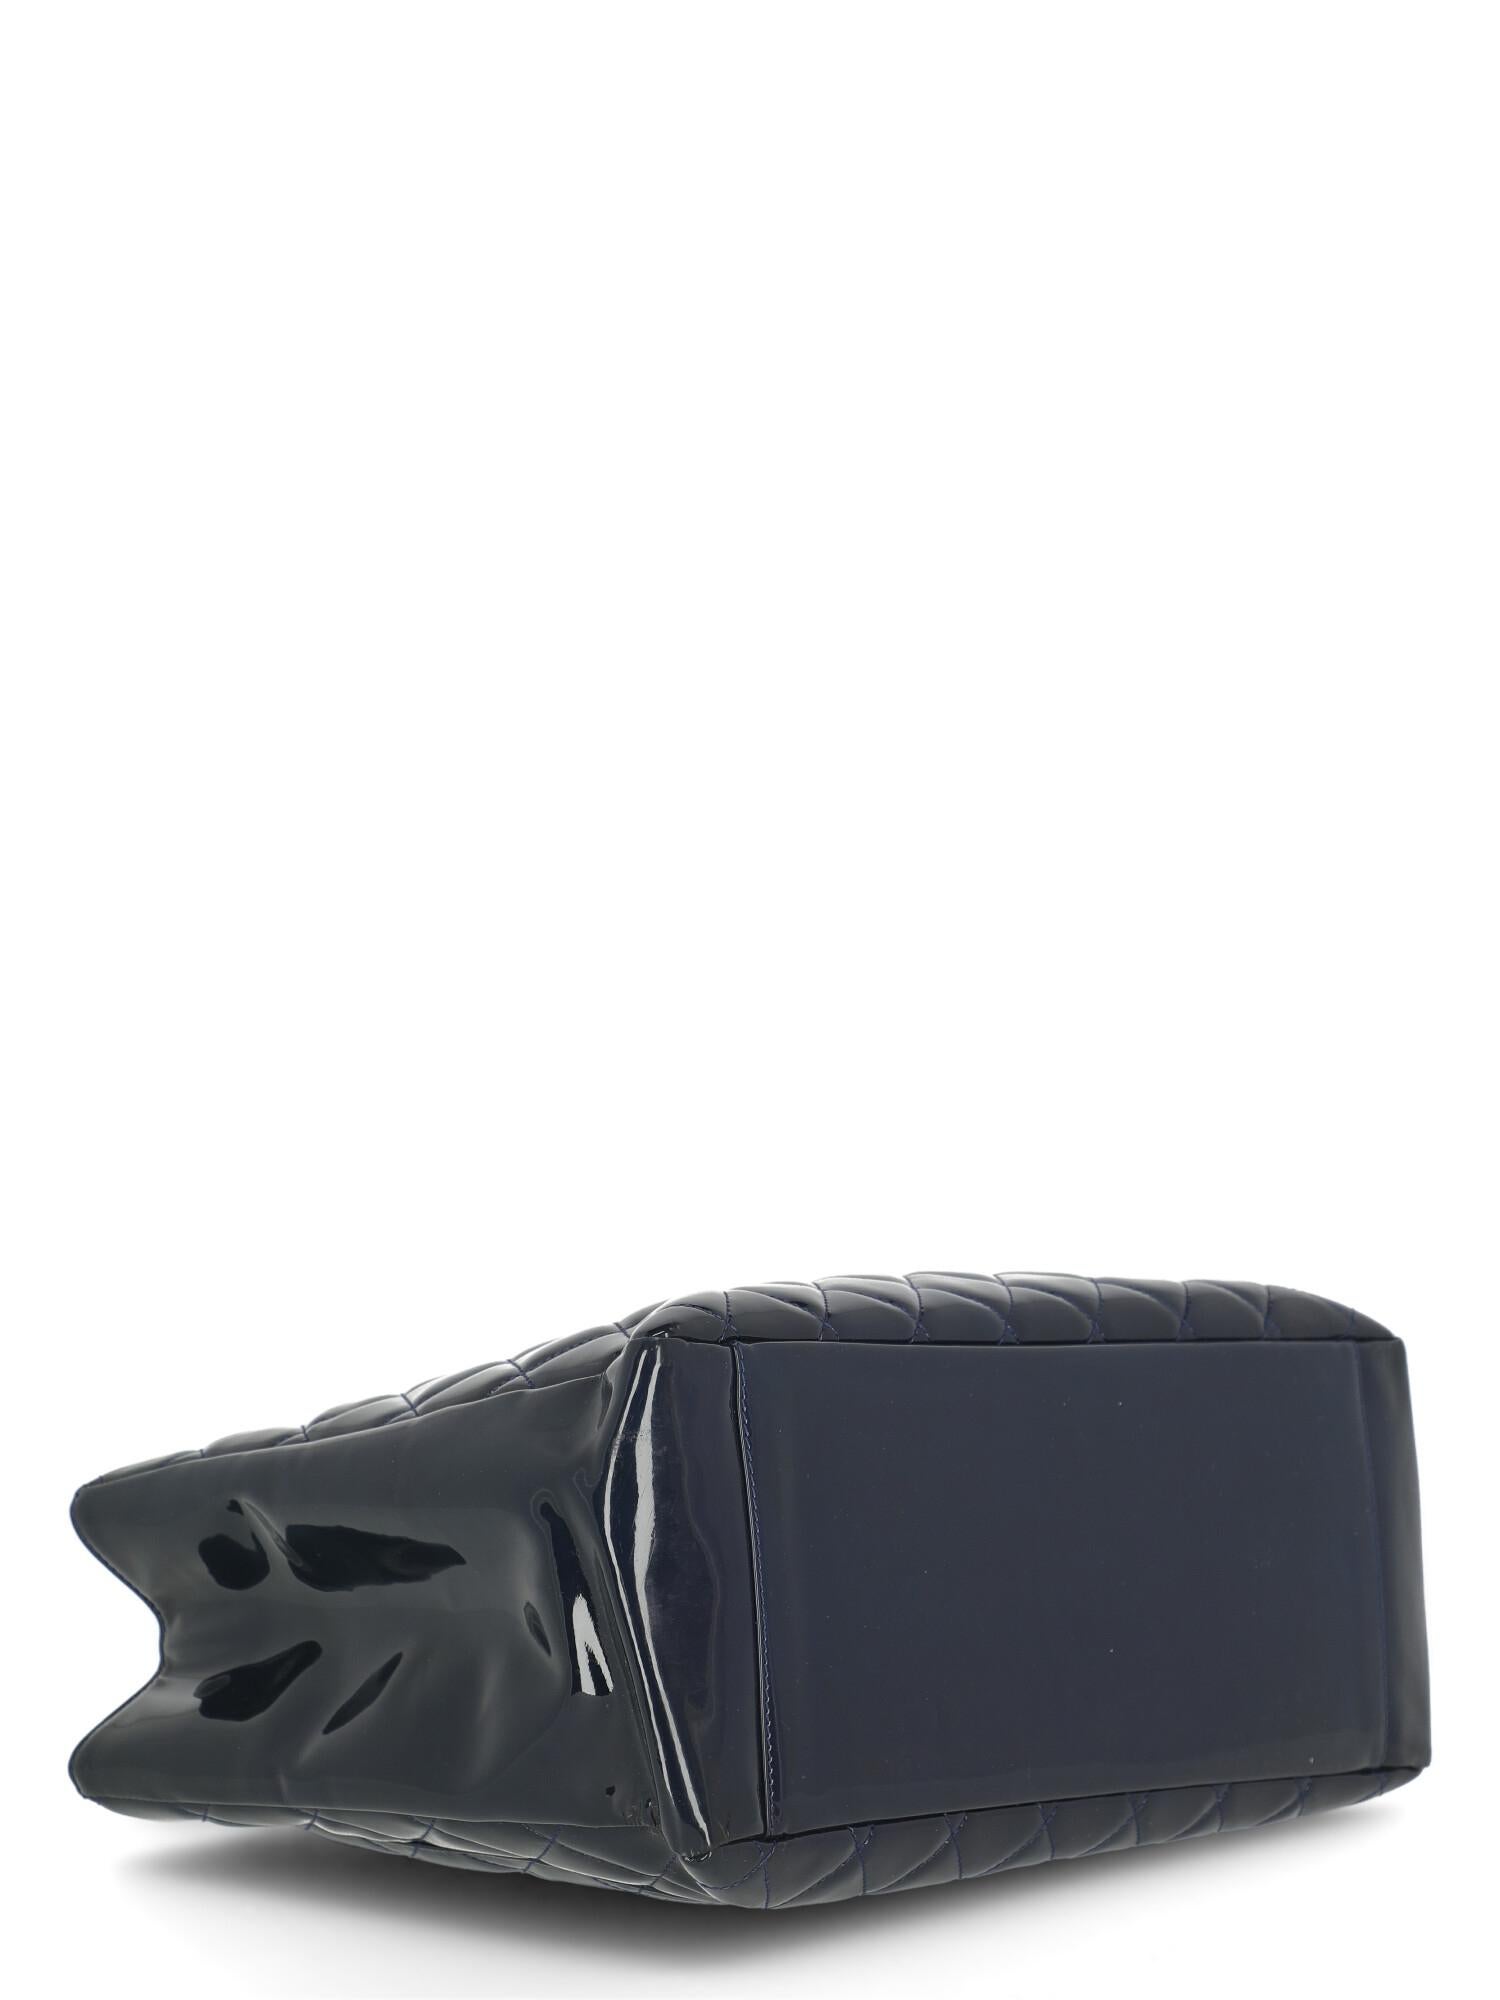 Chanel Women's Handbag Grand Shopping Tote Navy Leather 1